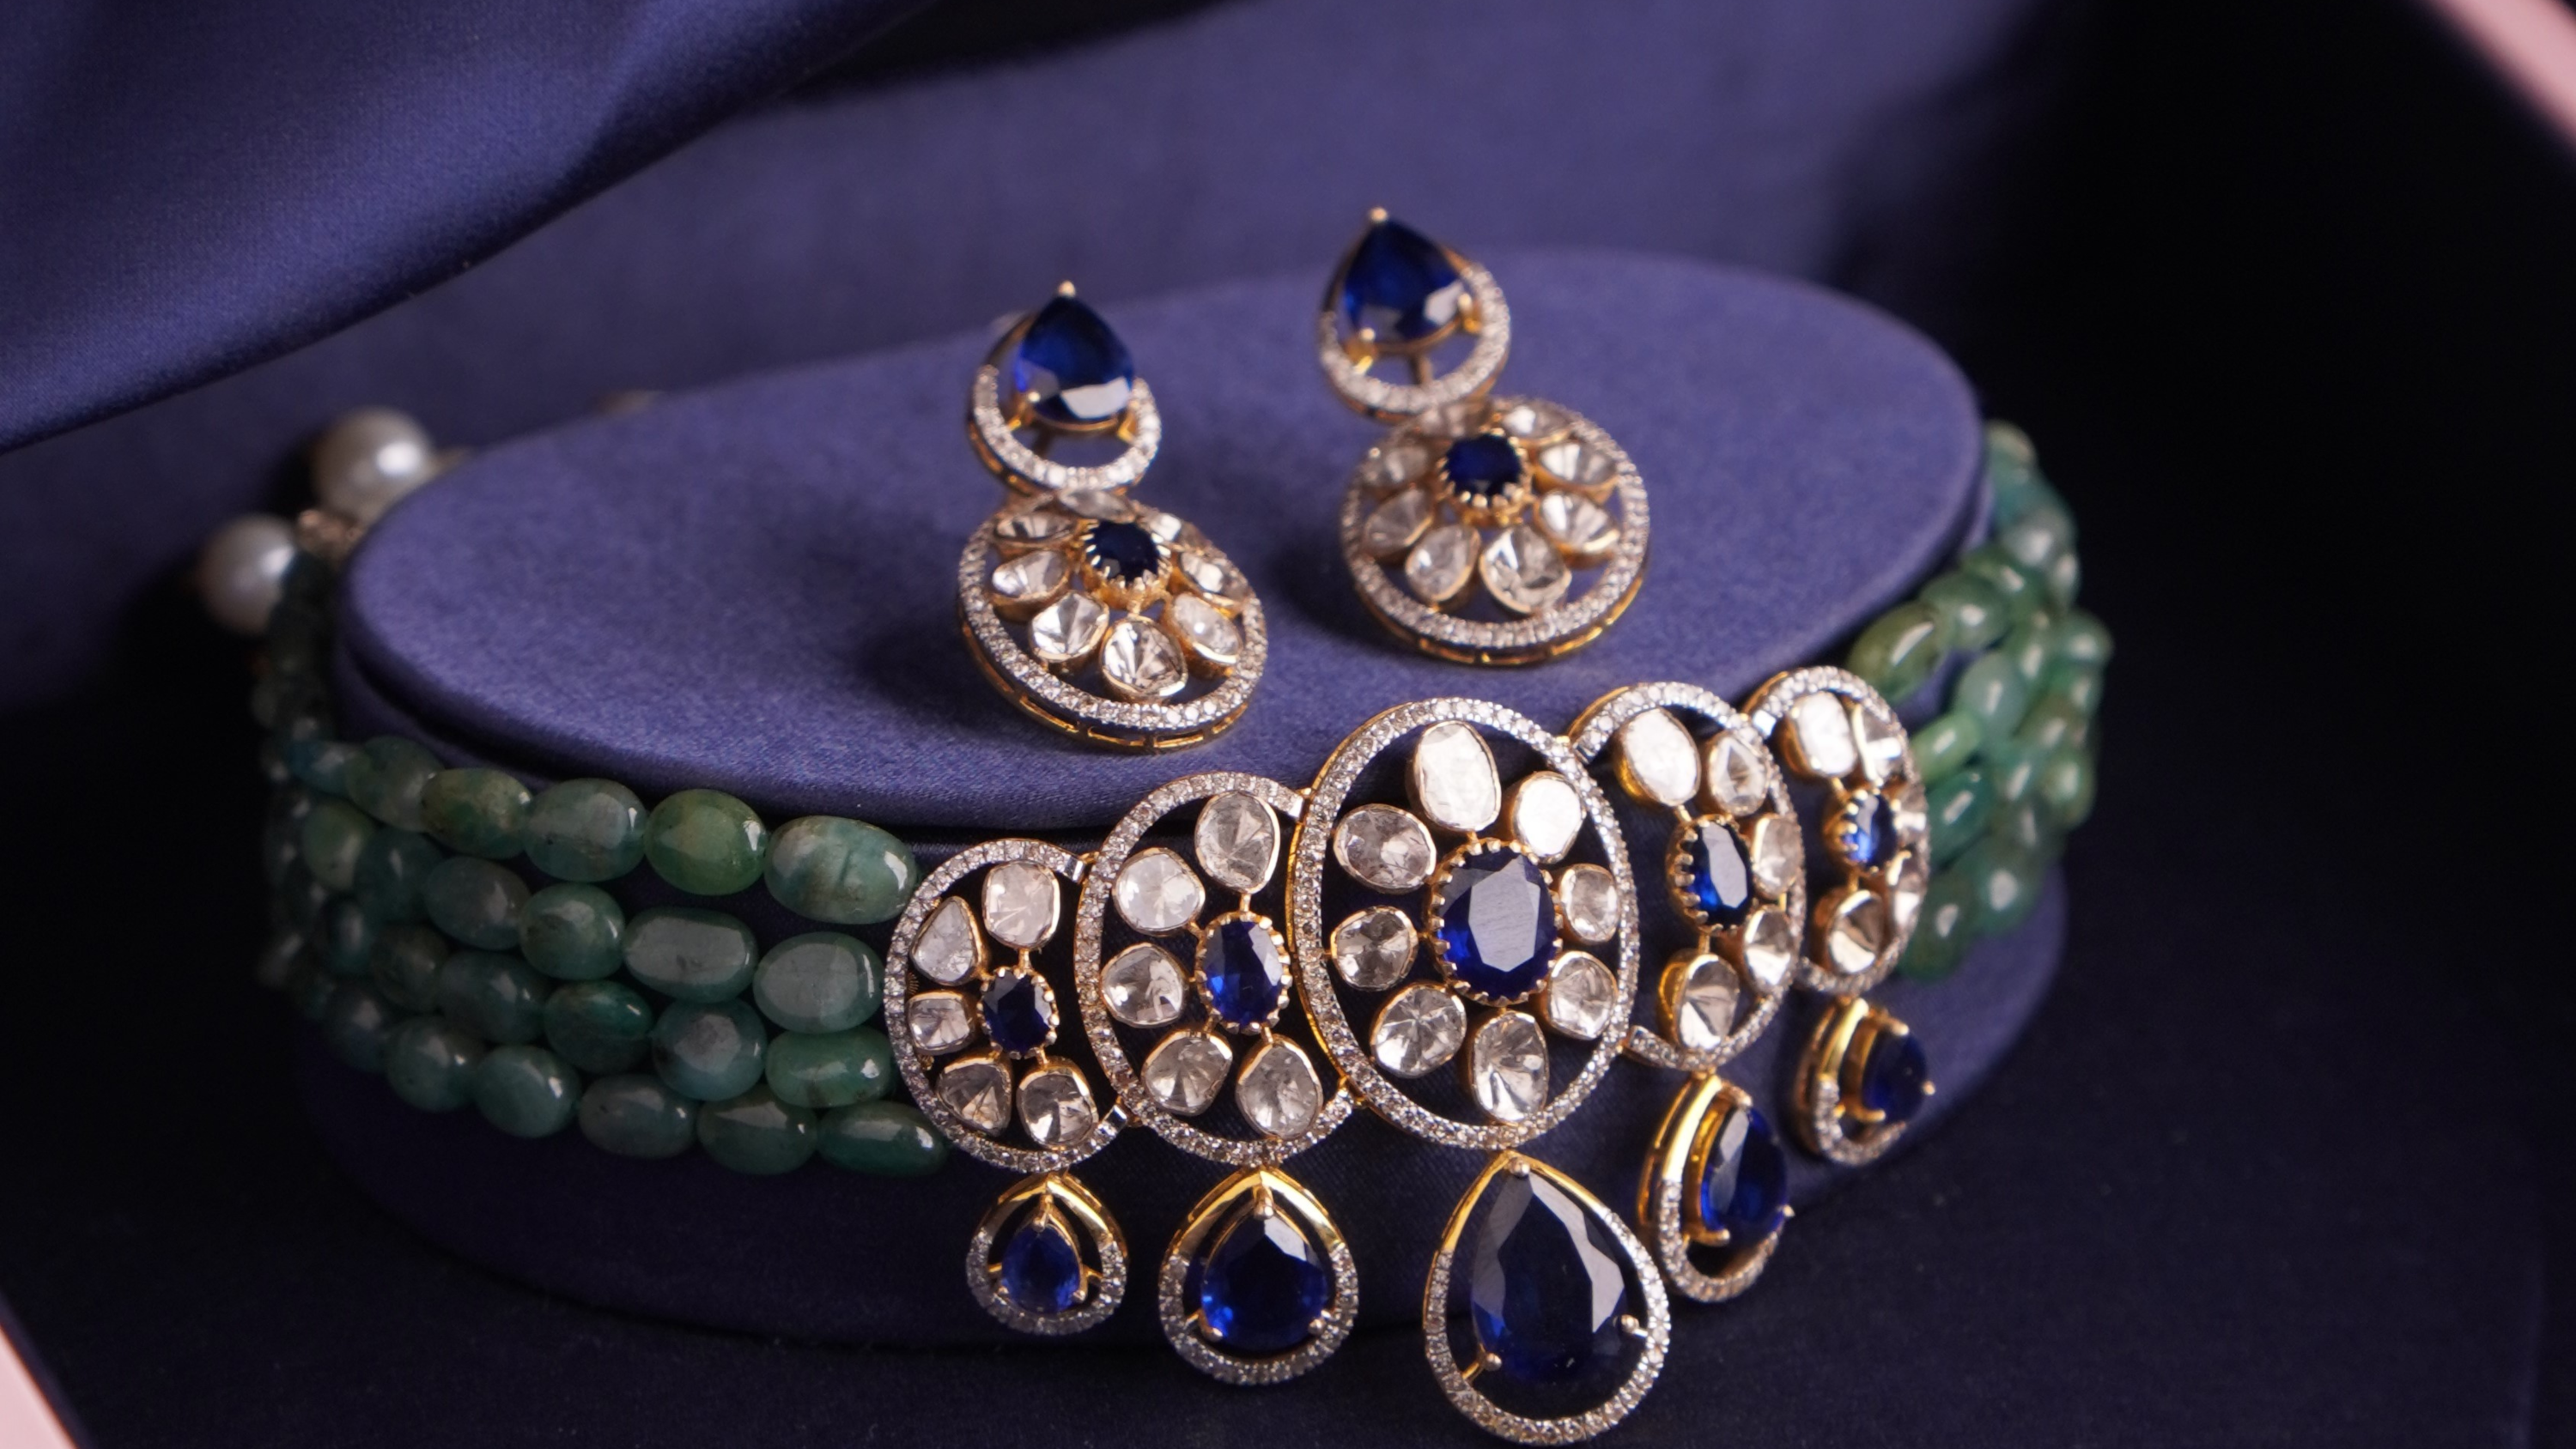 STMT DIY Jewelry Designer & Organizer Over 3000 Accessories /chokers &  bracelets